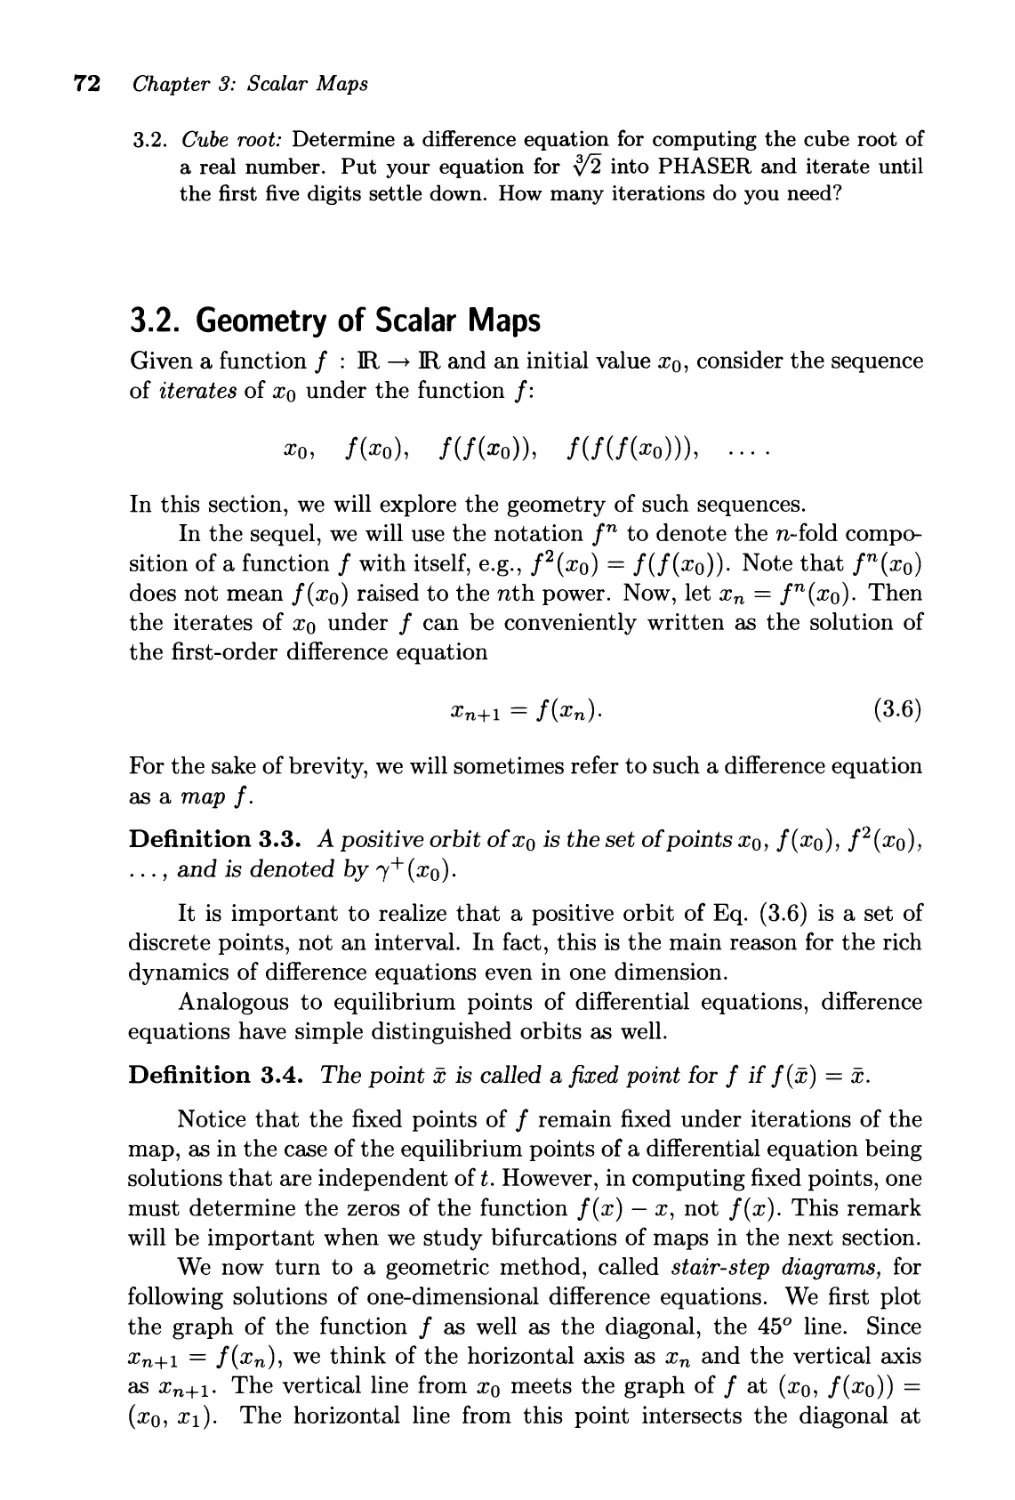 3.2. Geometry of Scalar Maps